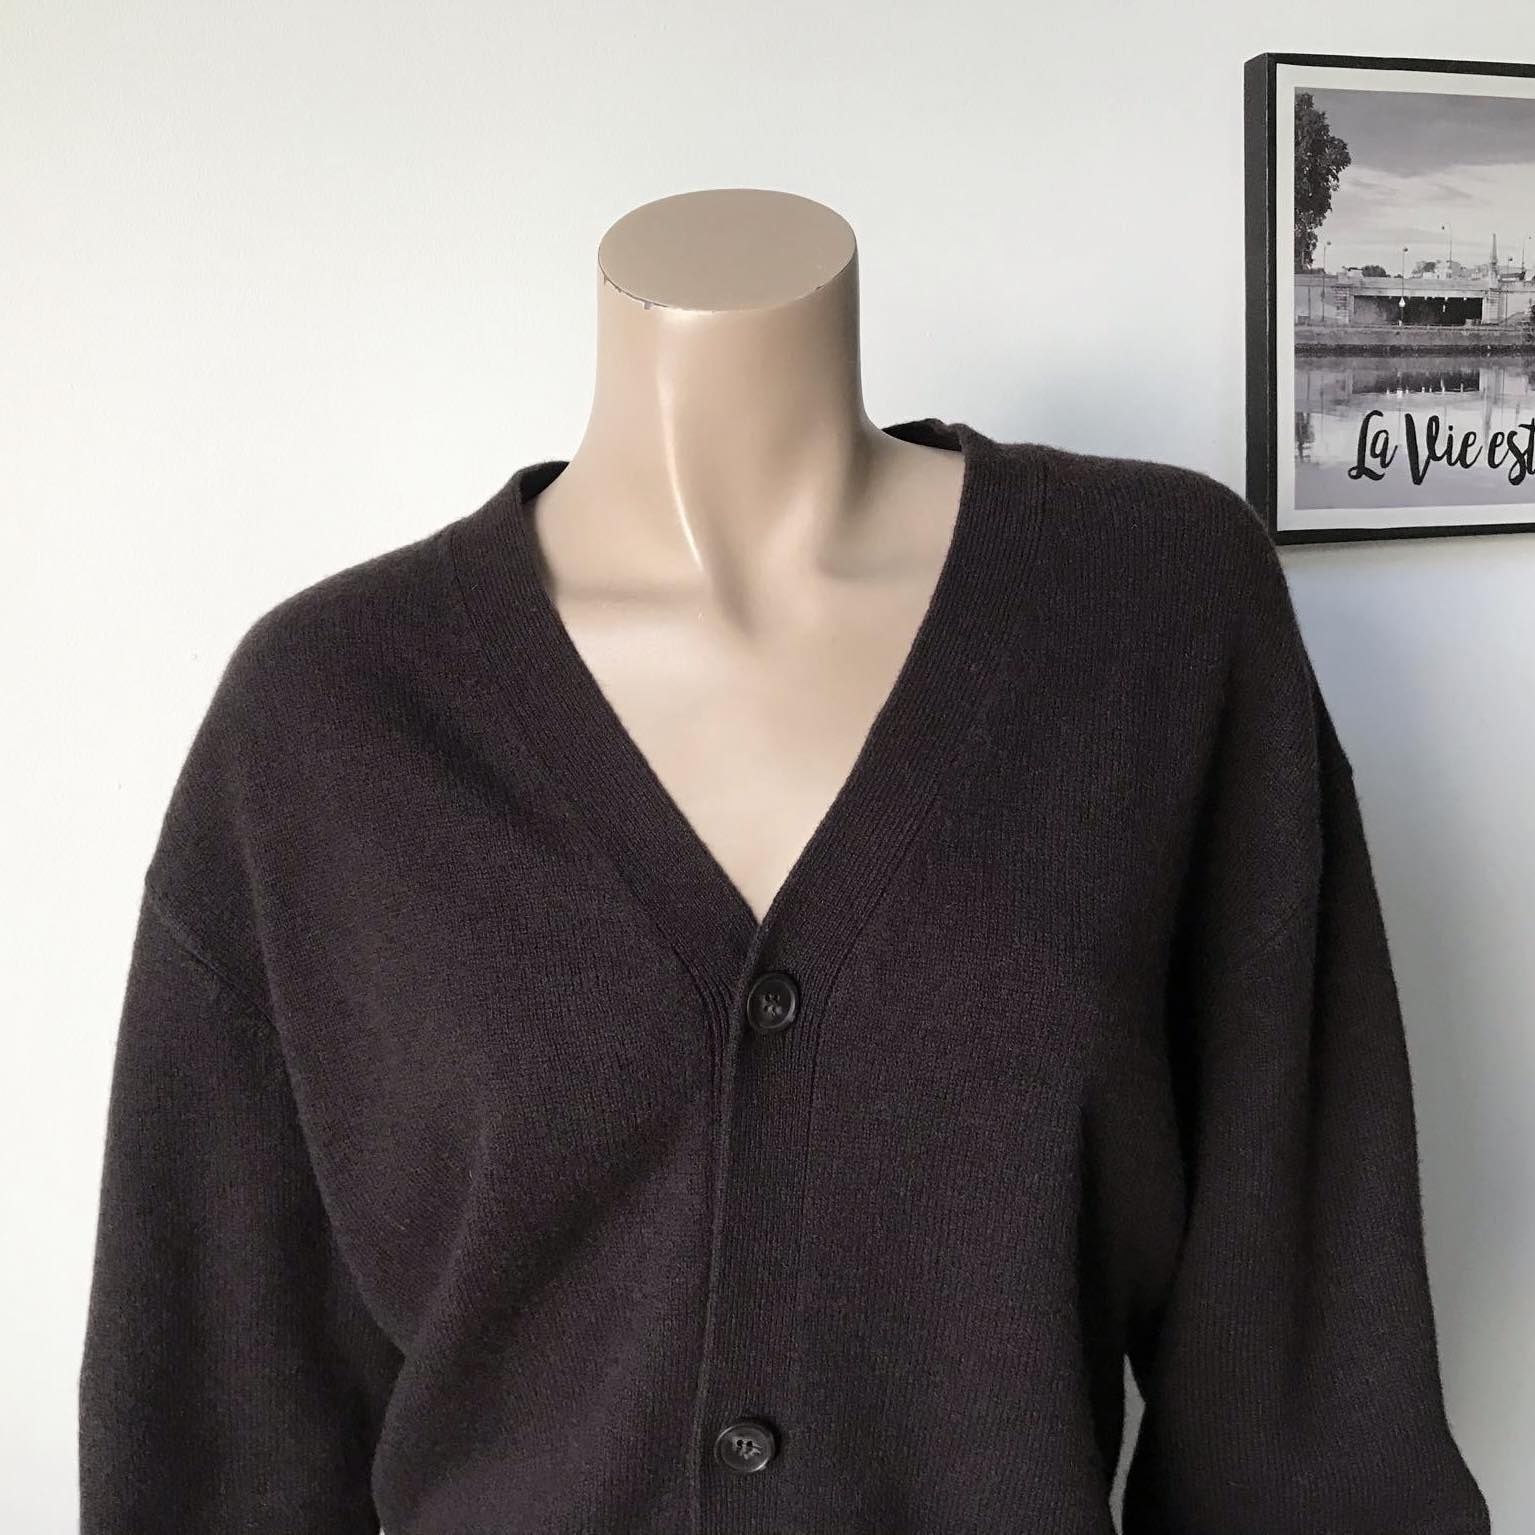 Samsoe&samsoe sweter damski L
100%wełna 
Rozmiar:L 
Kolor:ciemny brąz